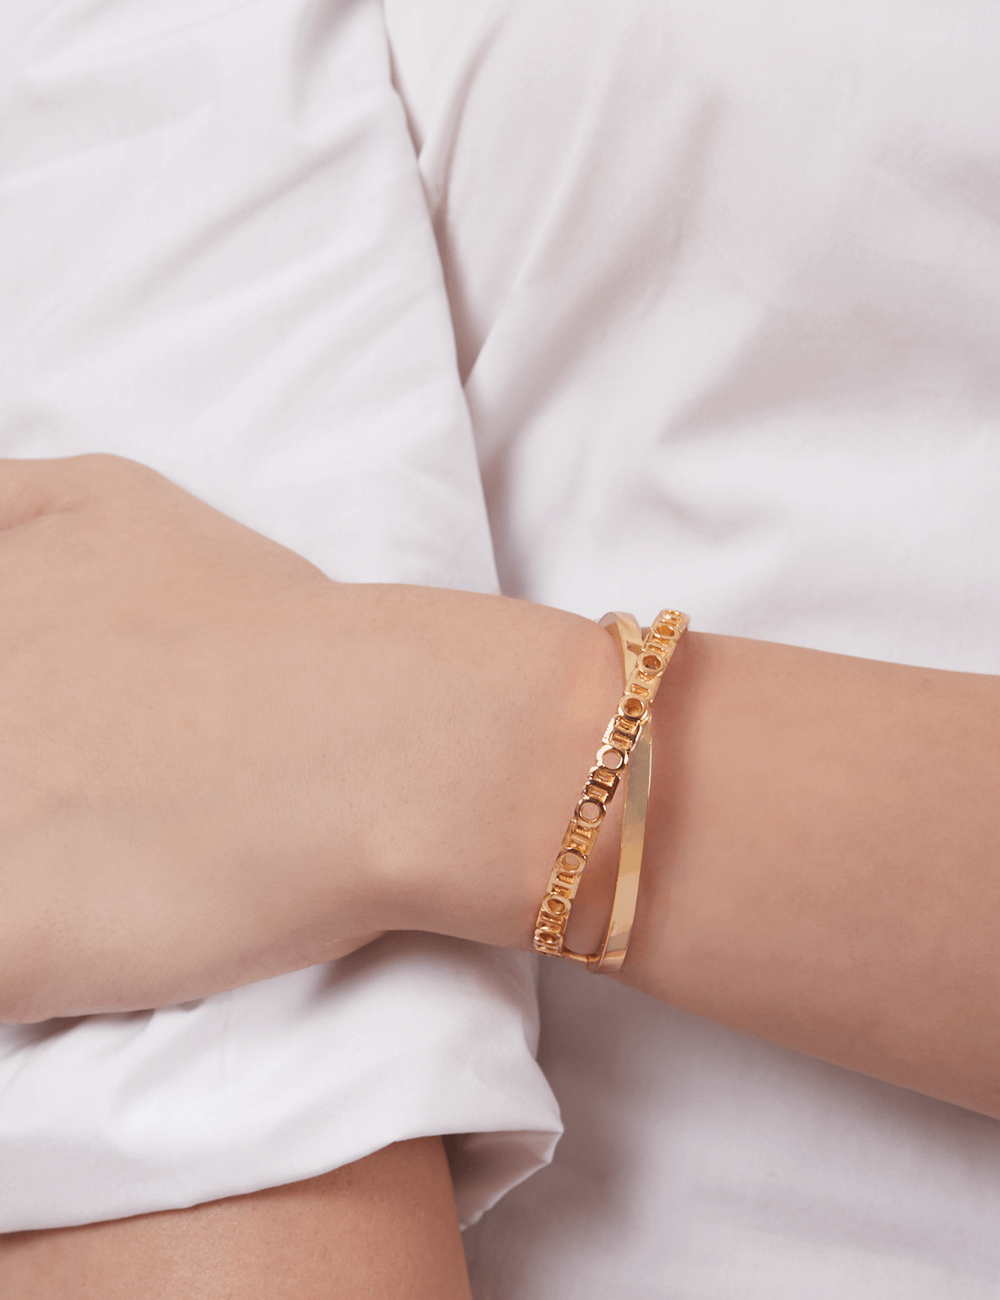 The Most Popular Designer Bracelets for Women